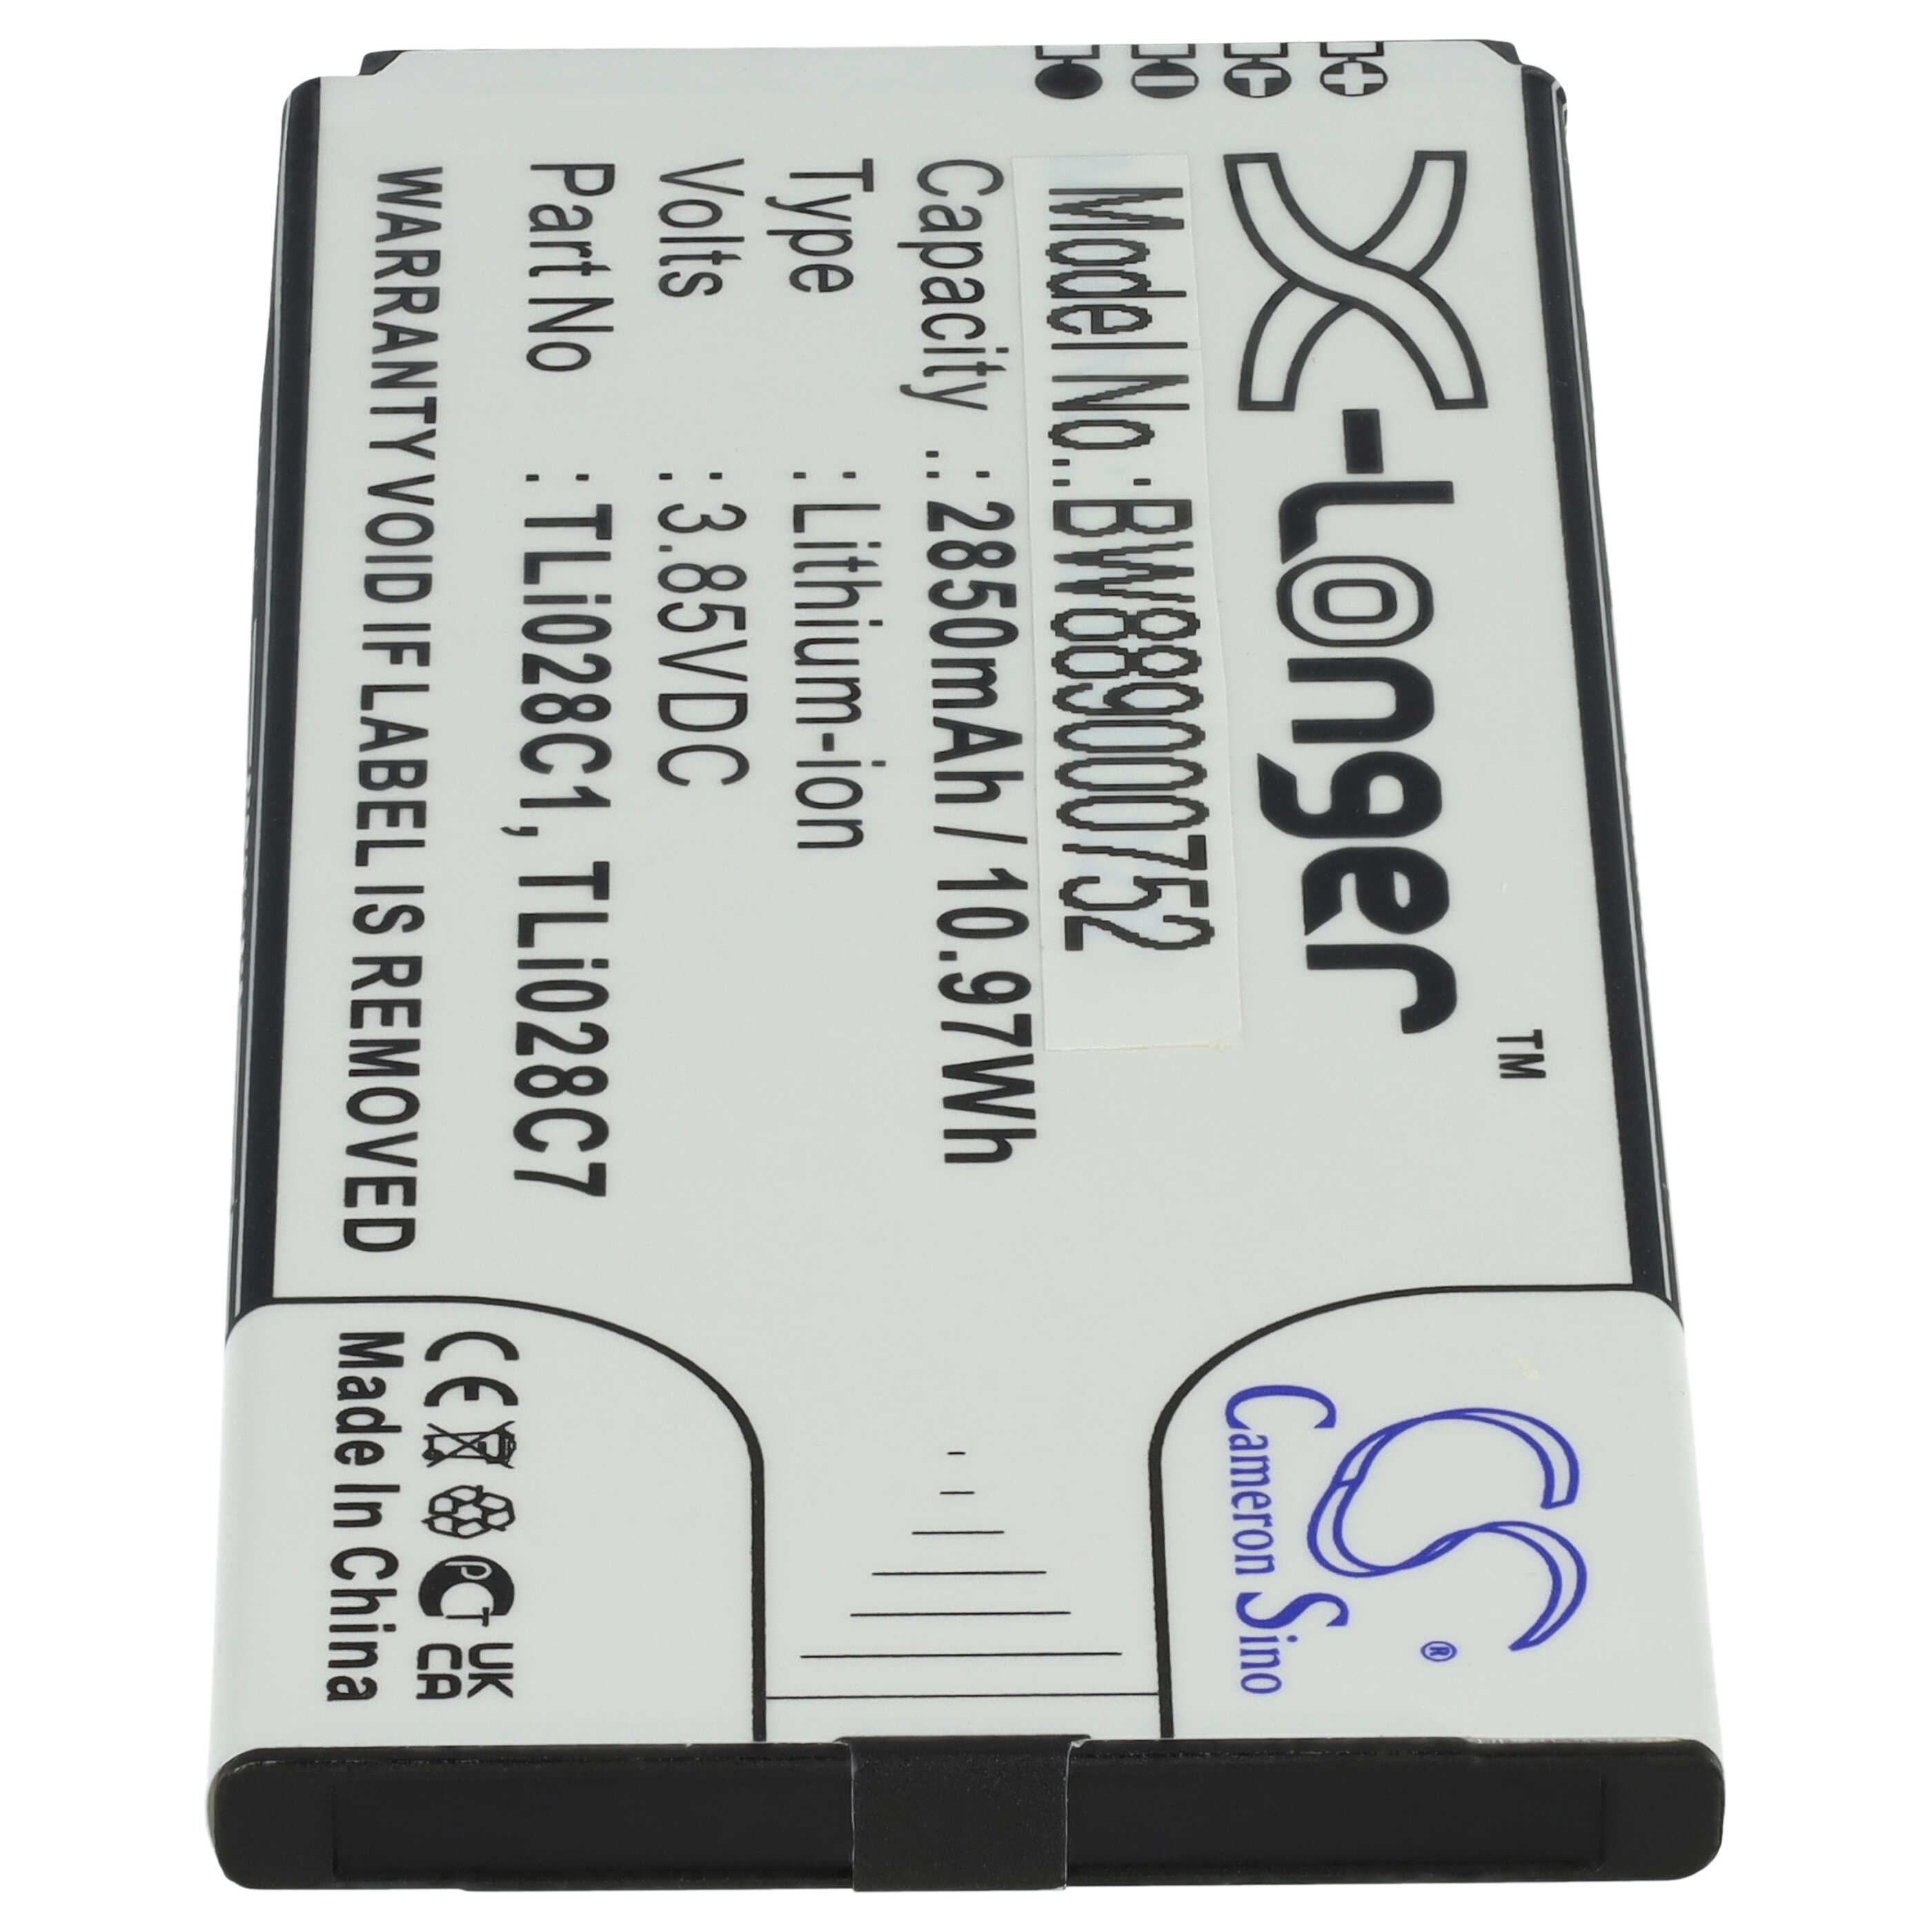 Mobile Phone Battery Replacement for Alcatel TLi028C1, TLi028C7 - 2850mAh 3.85V Li-Ion